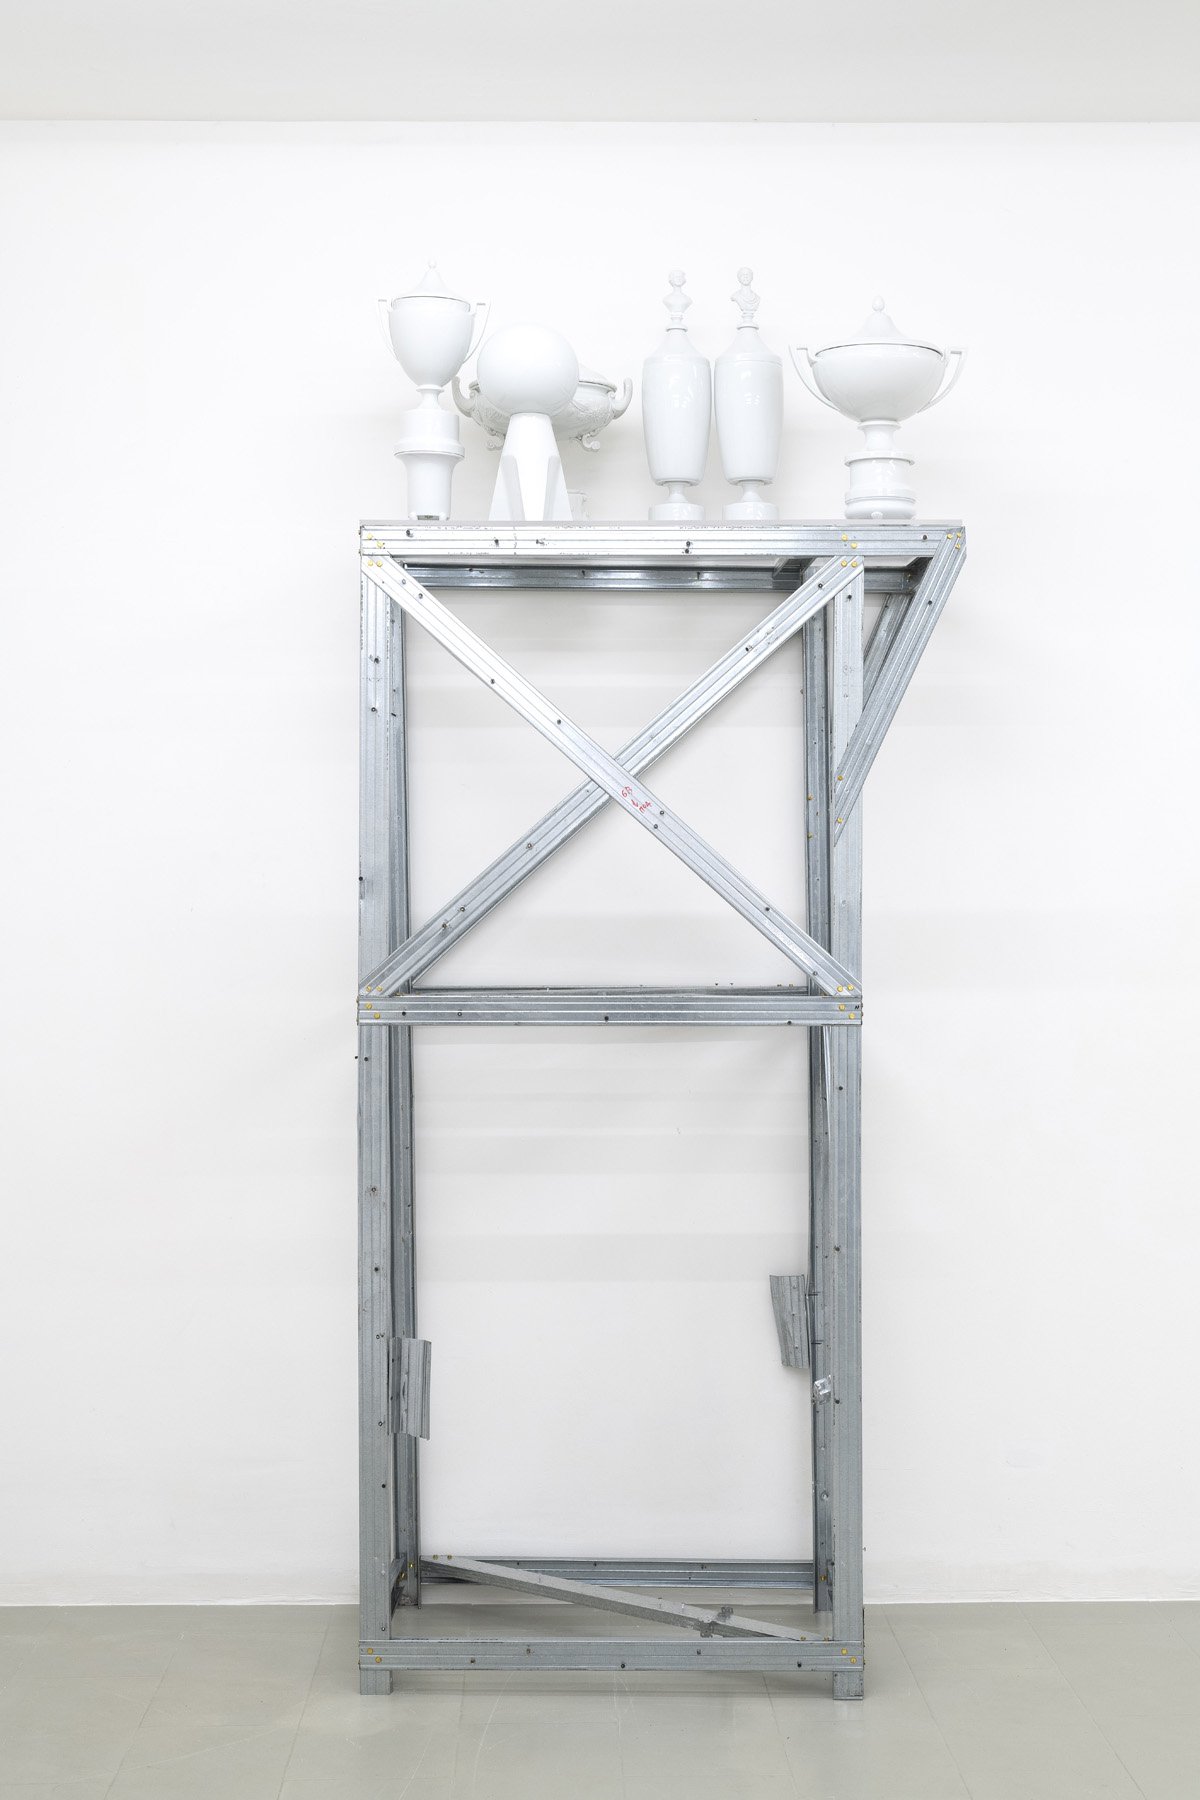 Plamen DejanoffUntitled, 2019Aluminium sculpture, plexi, six porcelain sculptures229 x 126 cm